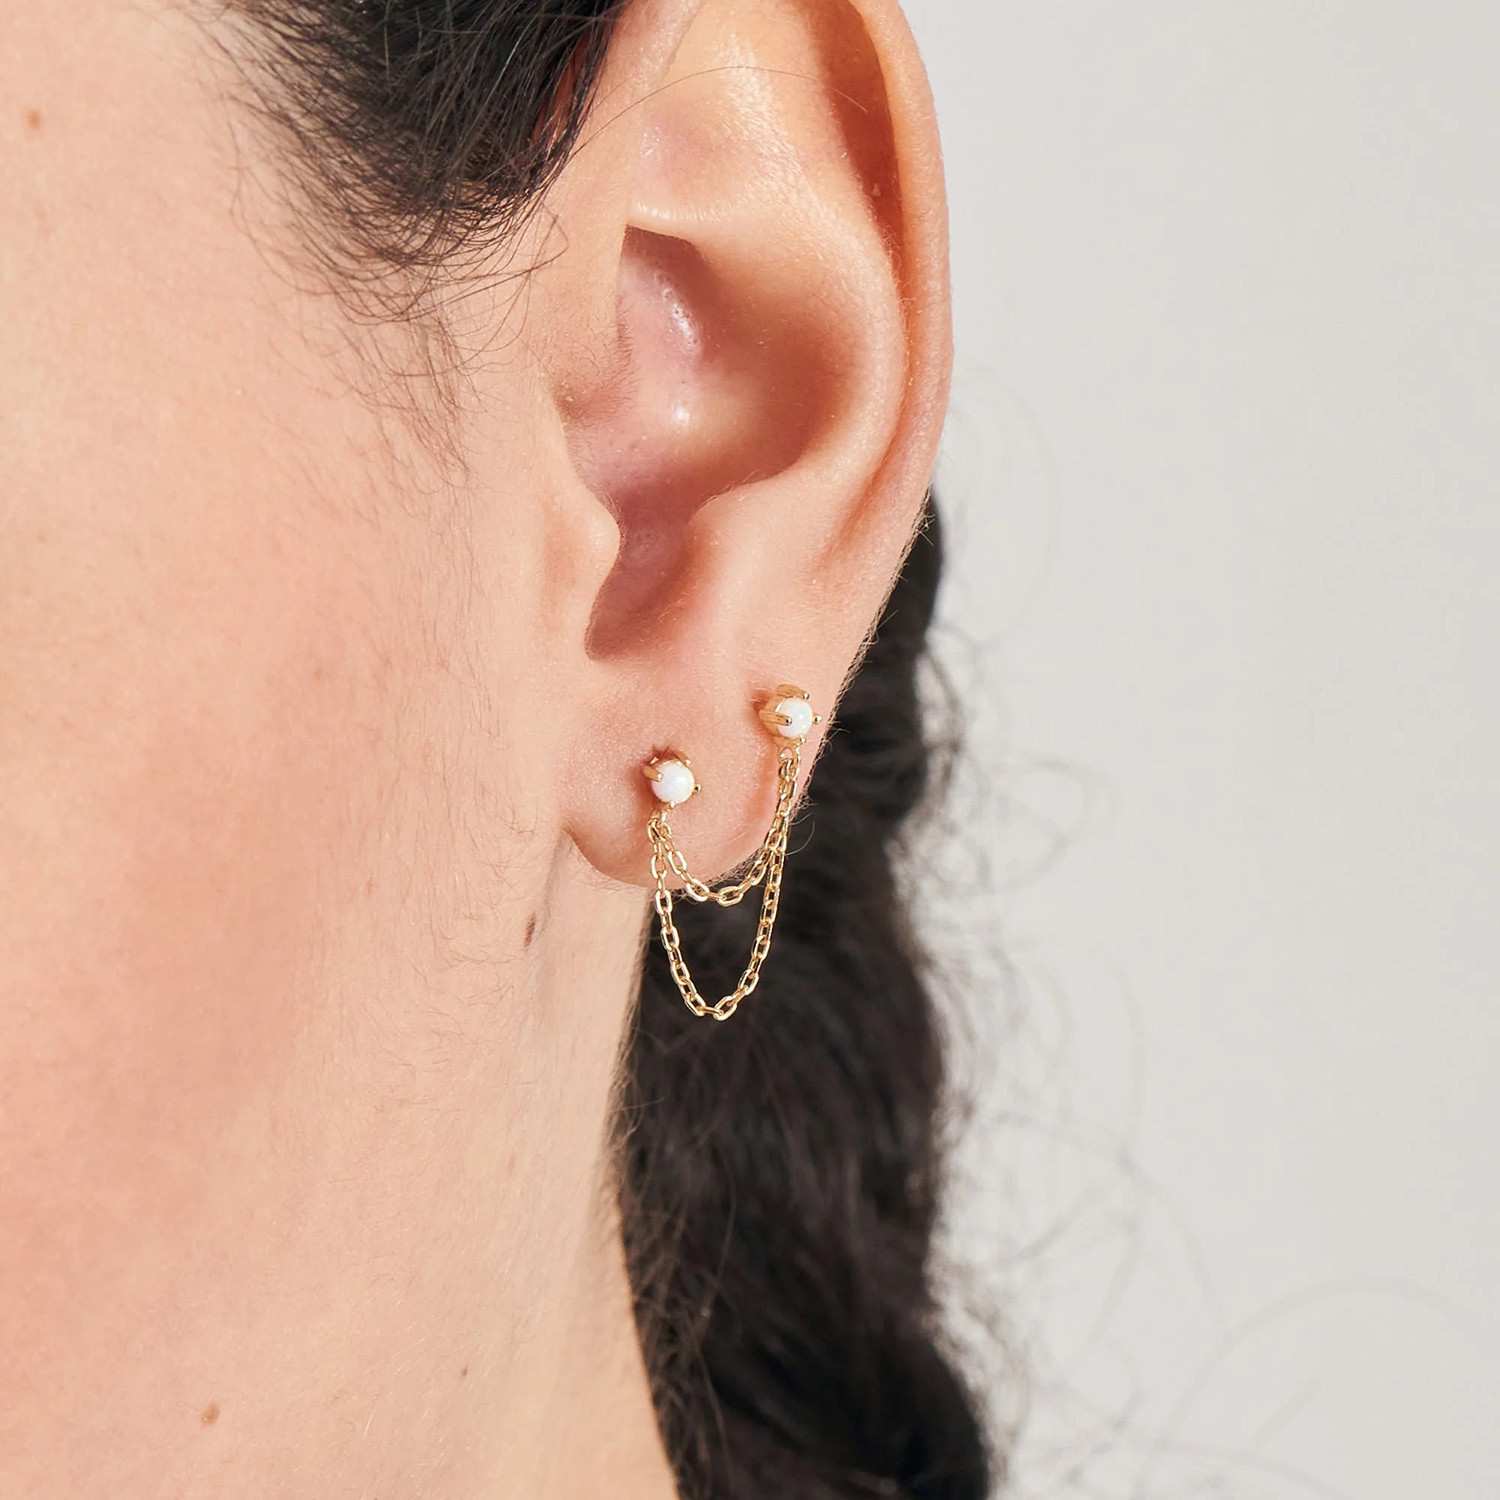 Boucle d'oreille individuelle Ania Haie Kyoto Opal
Drop Chain dorée